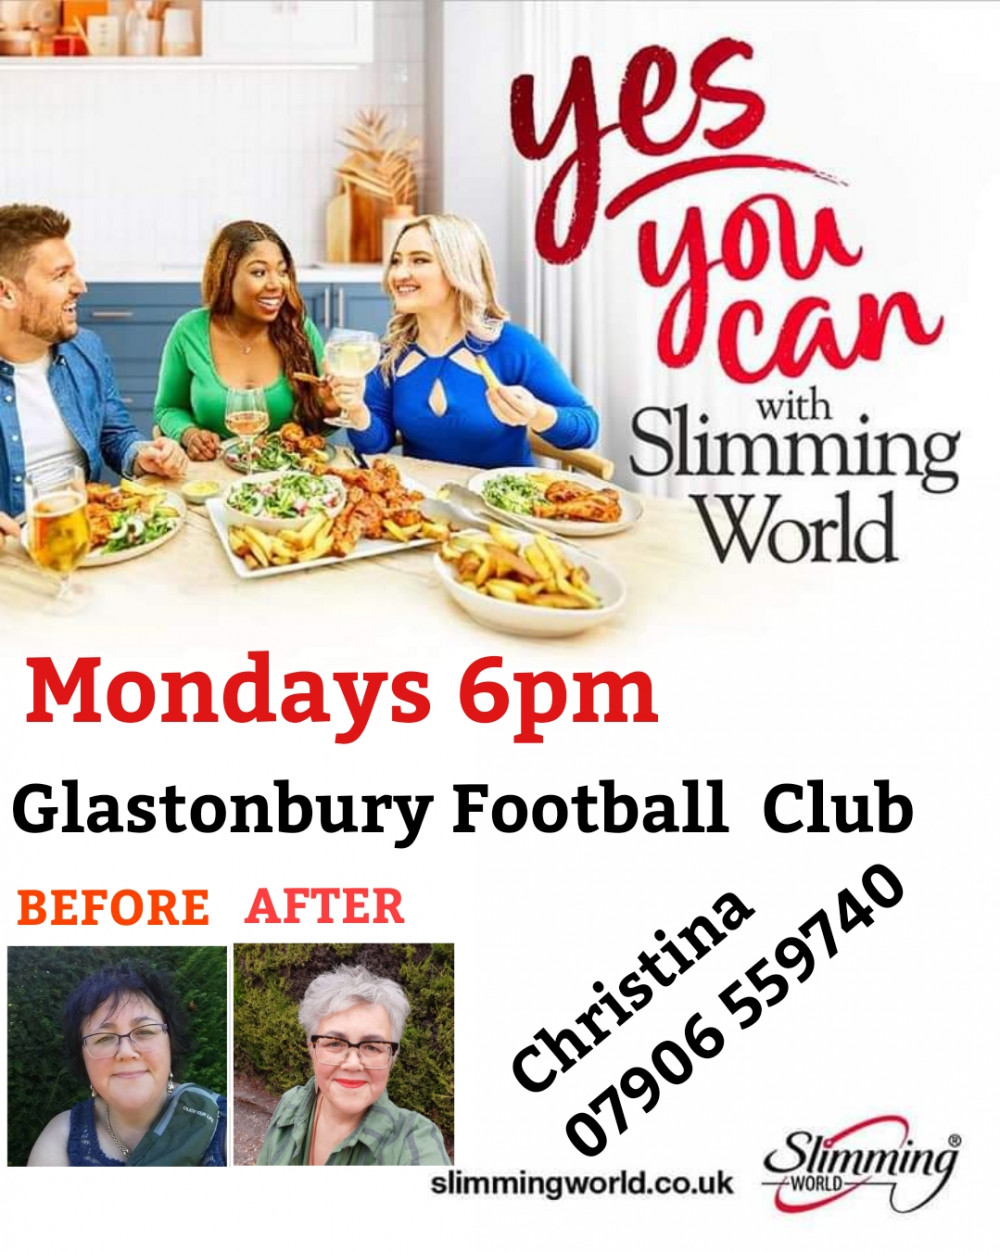 Slimming World meets on Mondays in Glastonbury